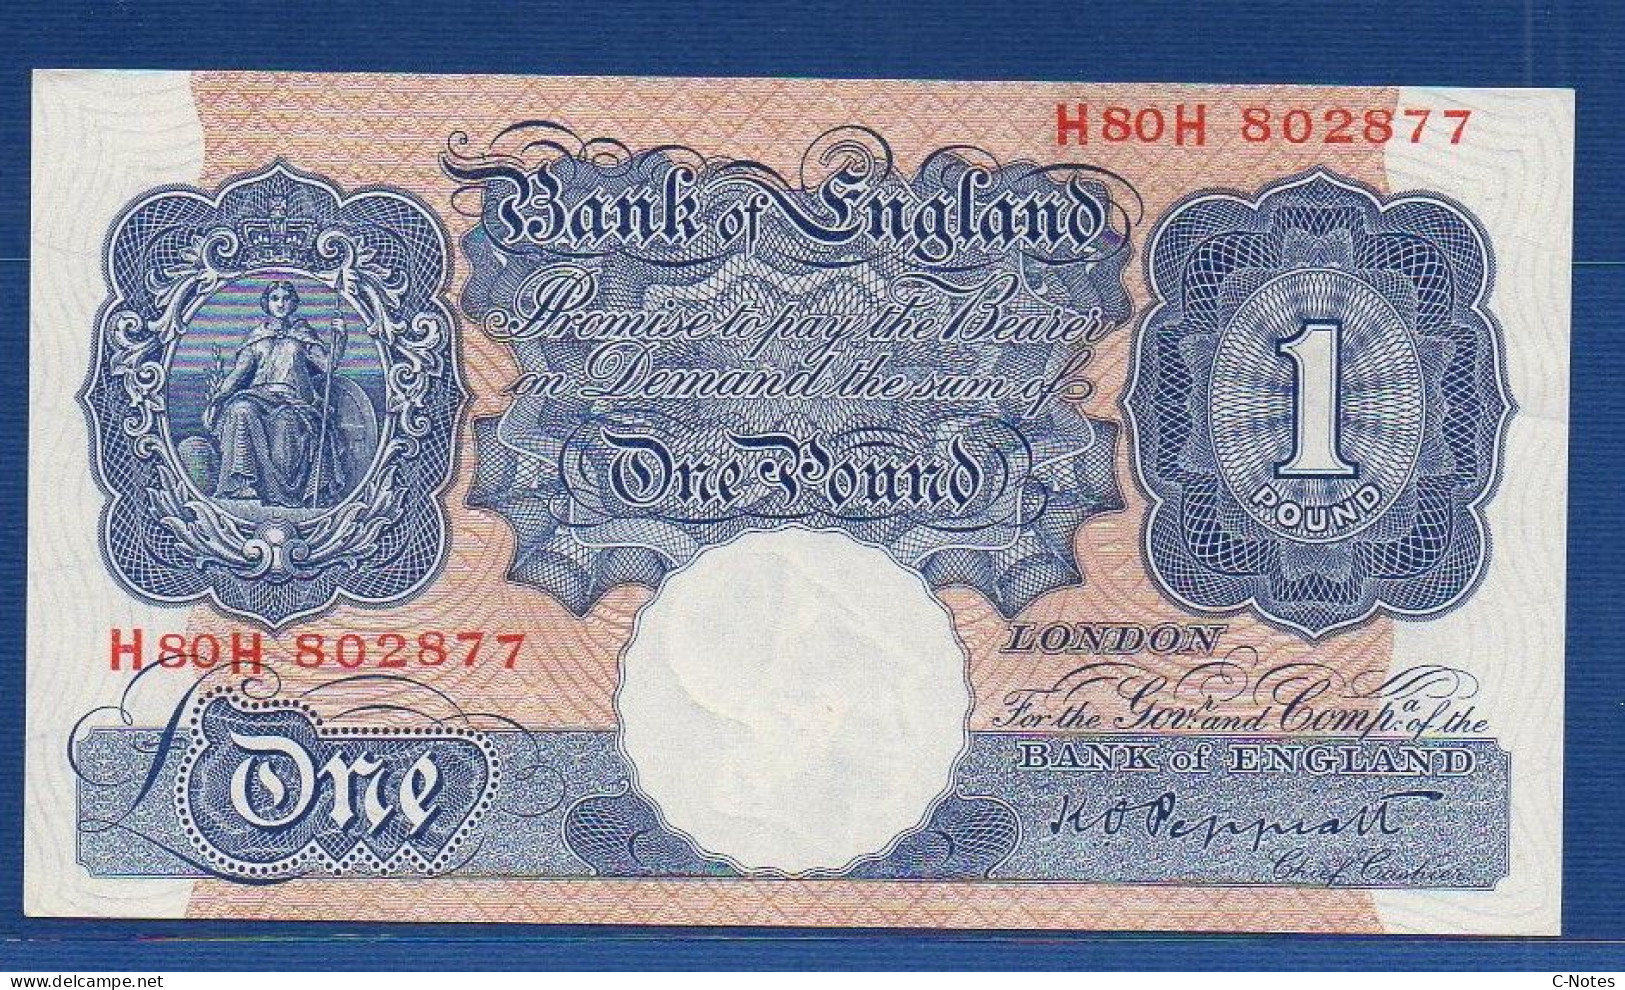 GREAT BRITAIN - P.367 – 1 Pound ND (1940 - 1948) UNC-,  S/n H80H 802877 - 1 Pond